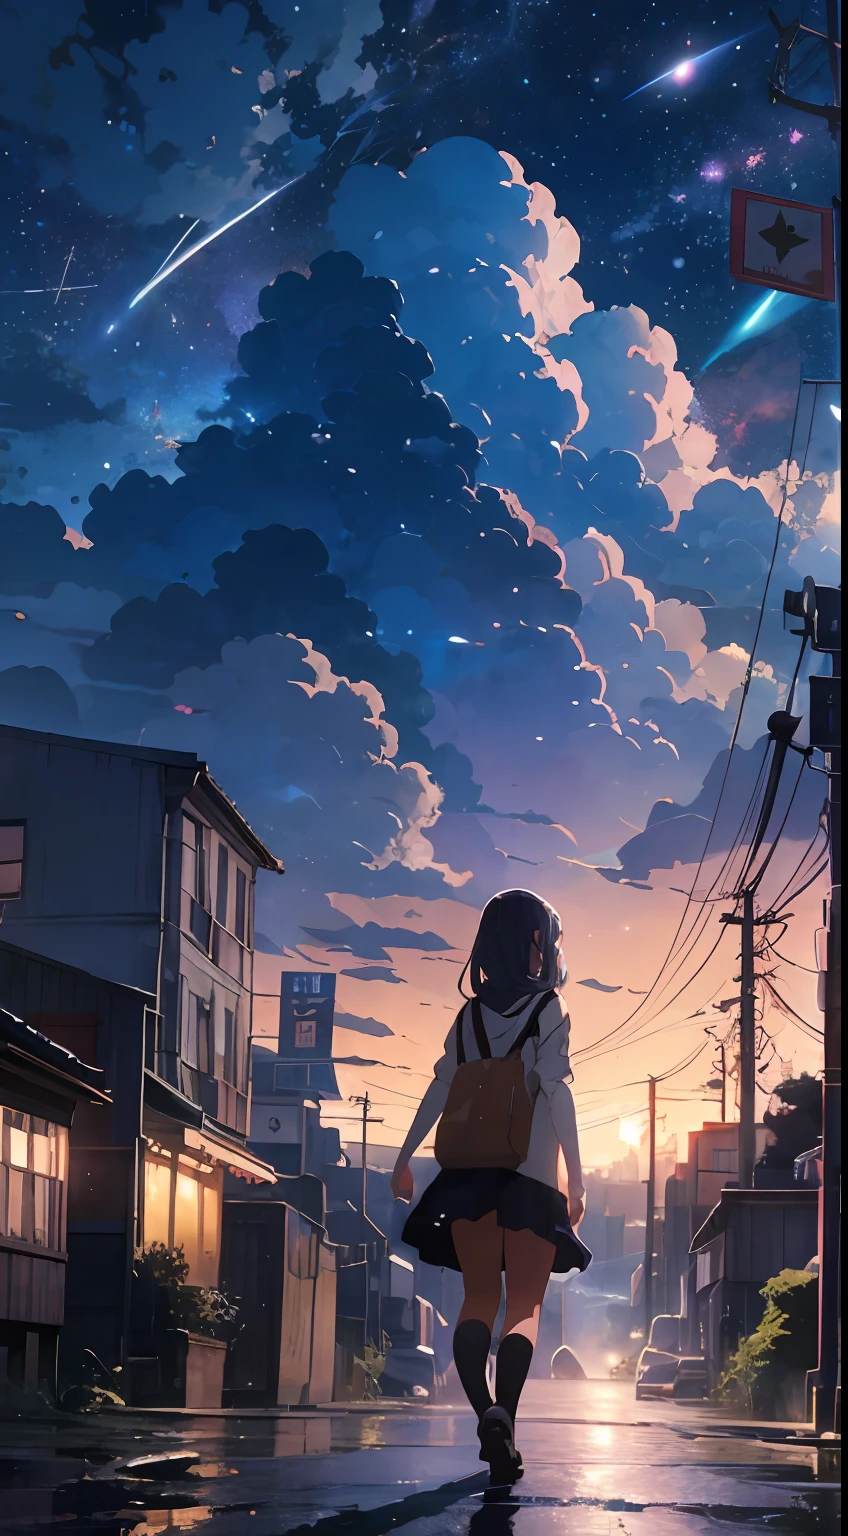 Anime Girl Watching Meteor Shower Live Wallpaper - MoeWalls